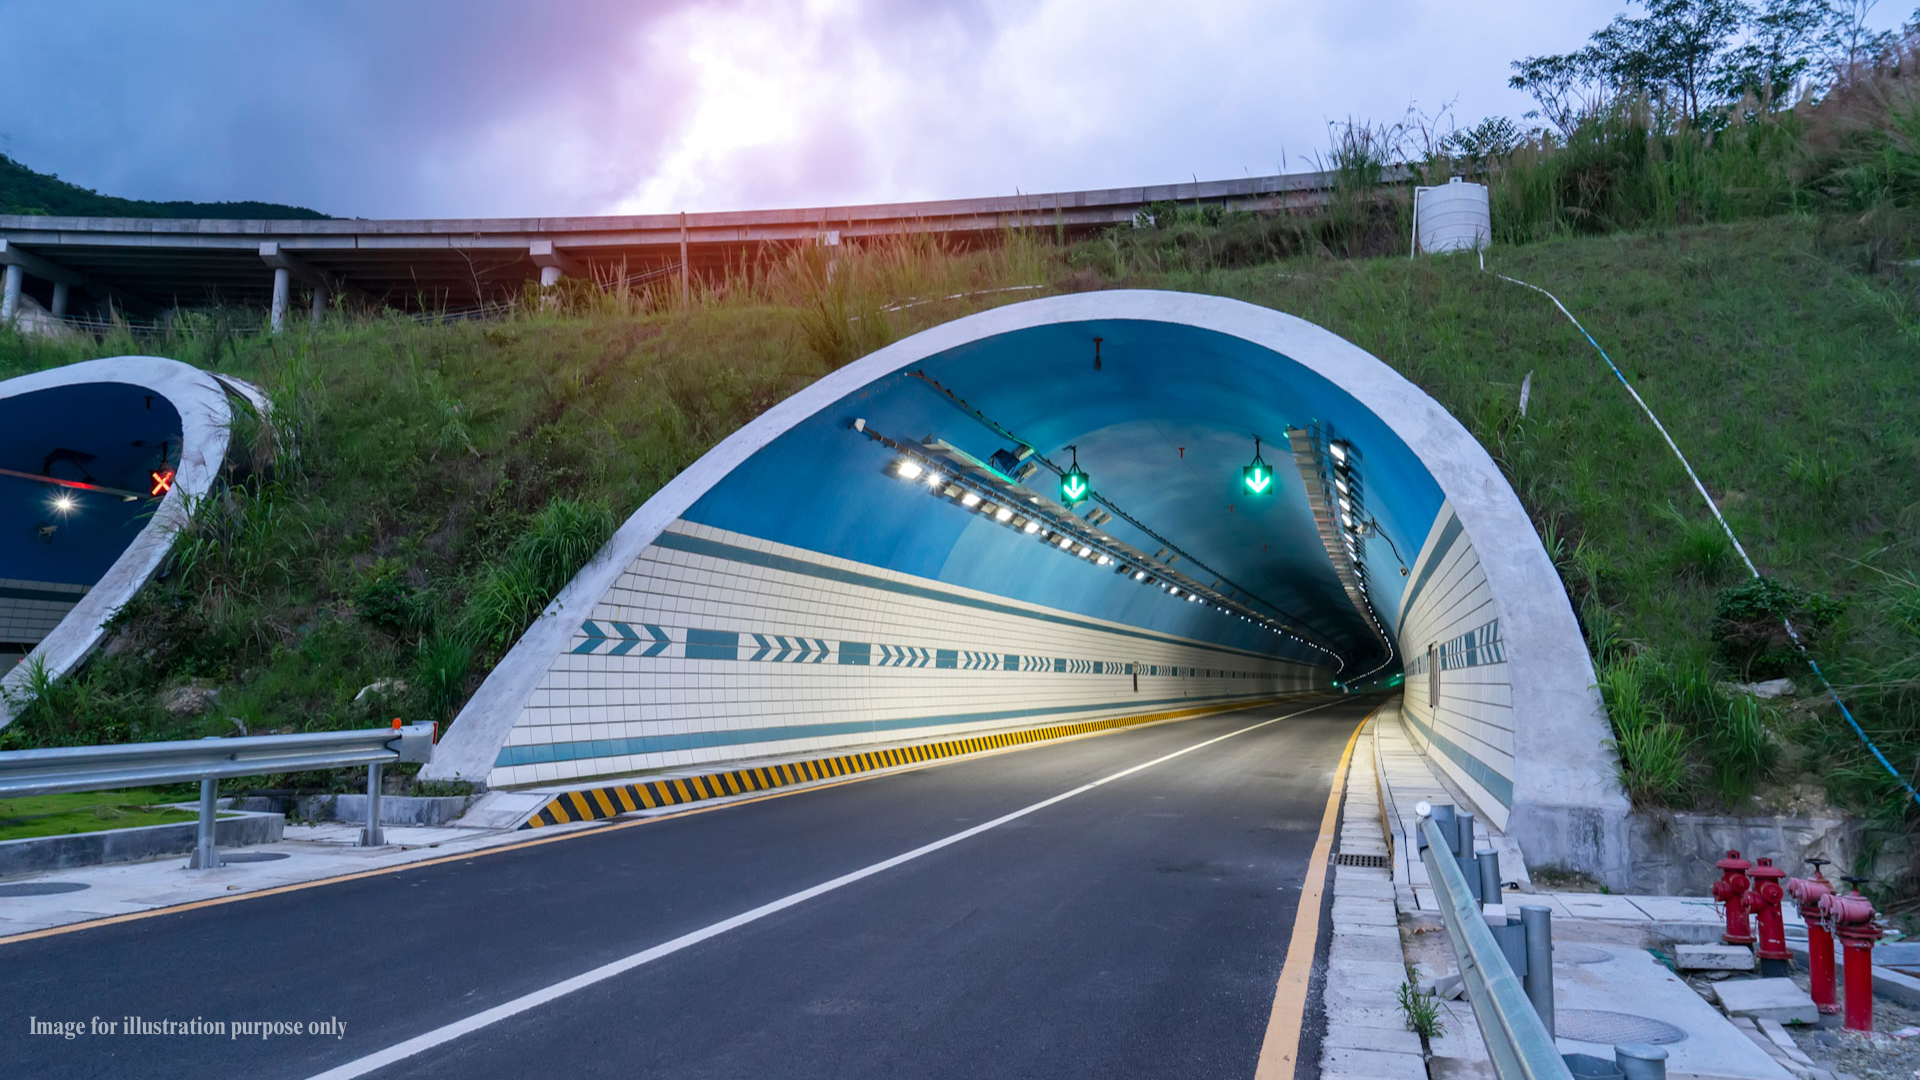 Shinku La tunnel